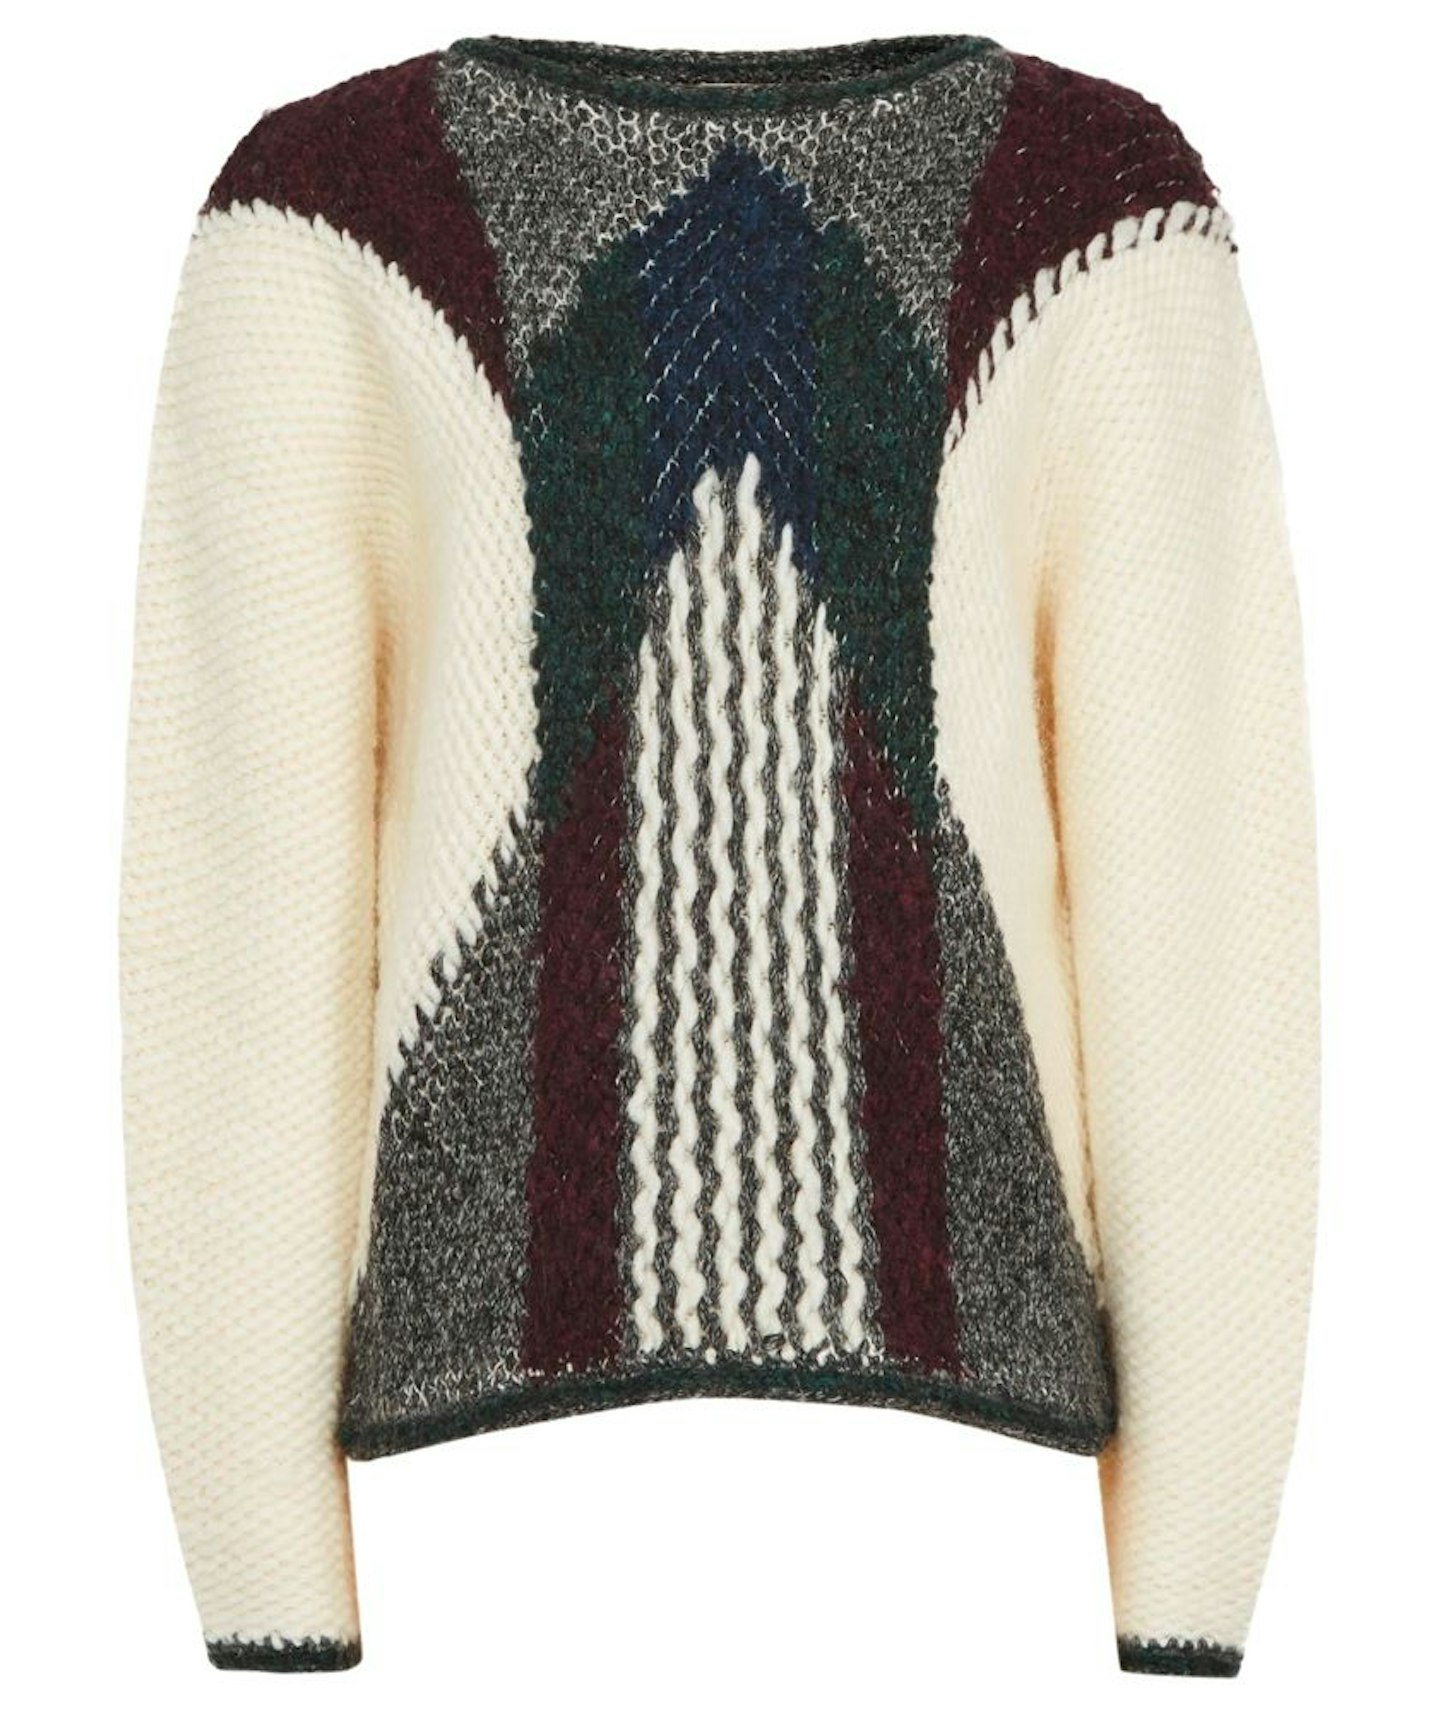 Reiss knitted jumper